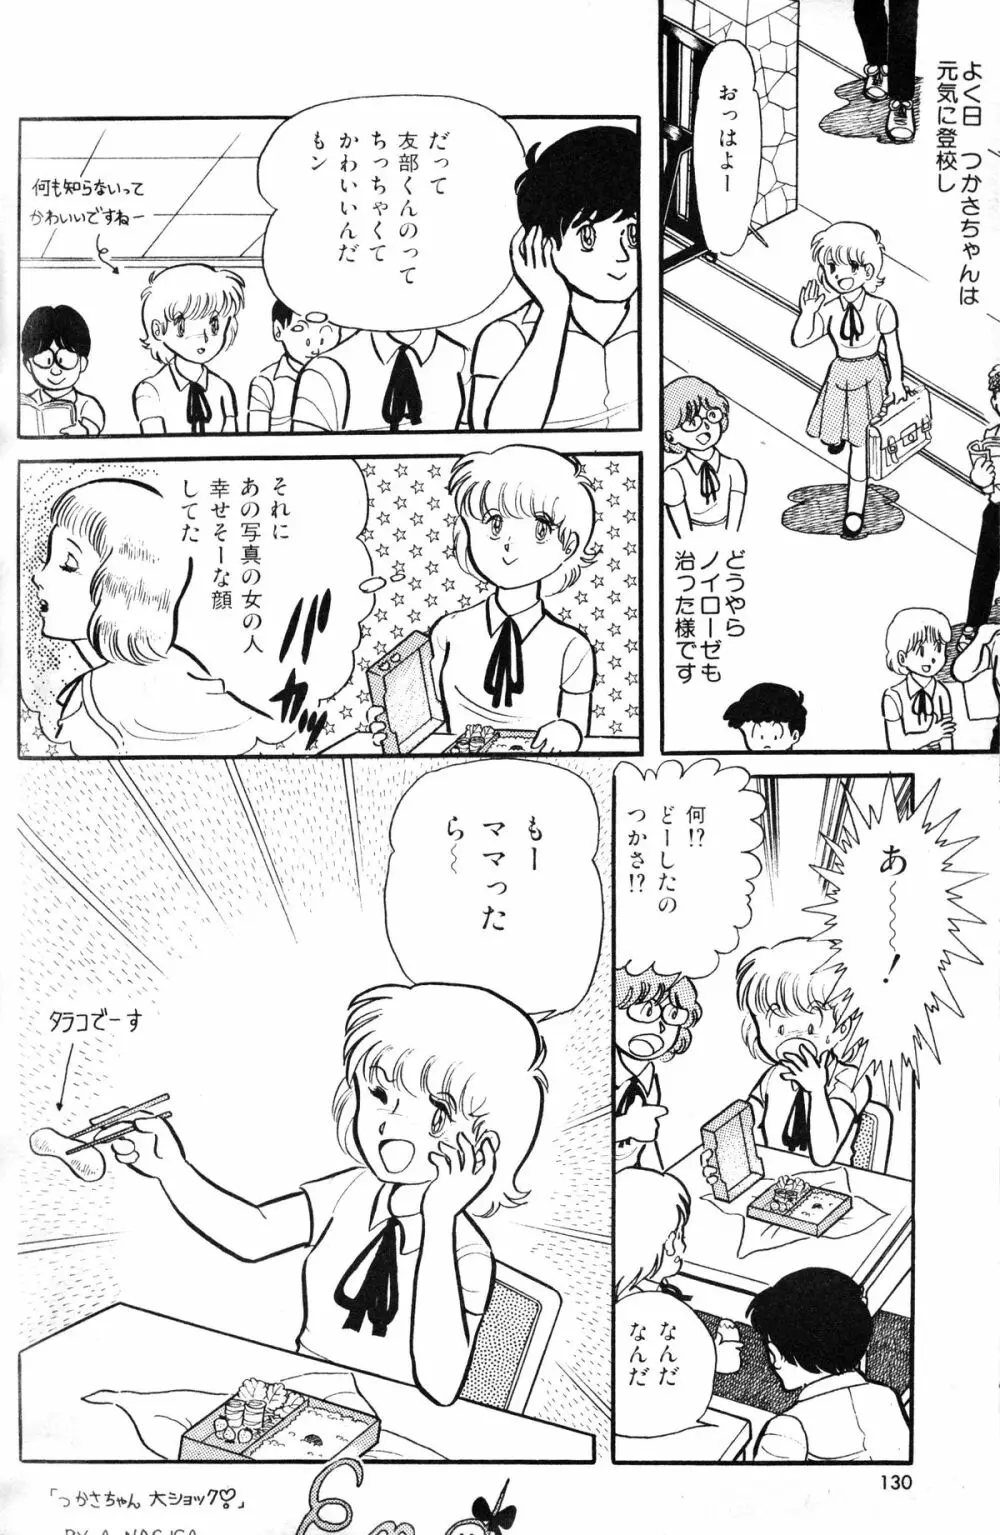 Melon Comic No. 01, メロンコミック 昭和59年6月号 132ページ